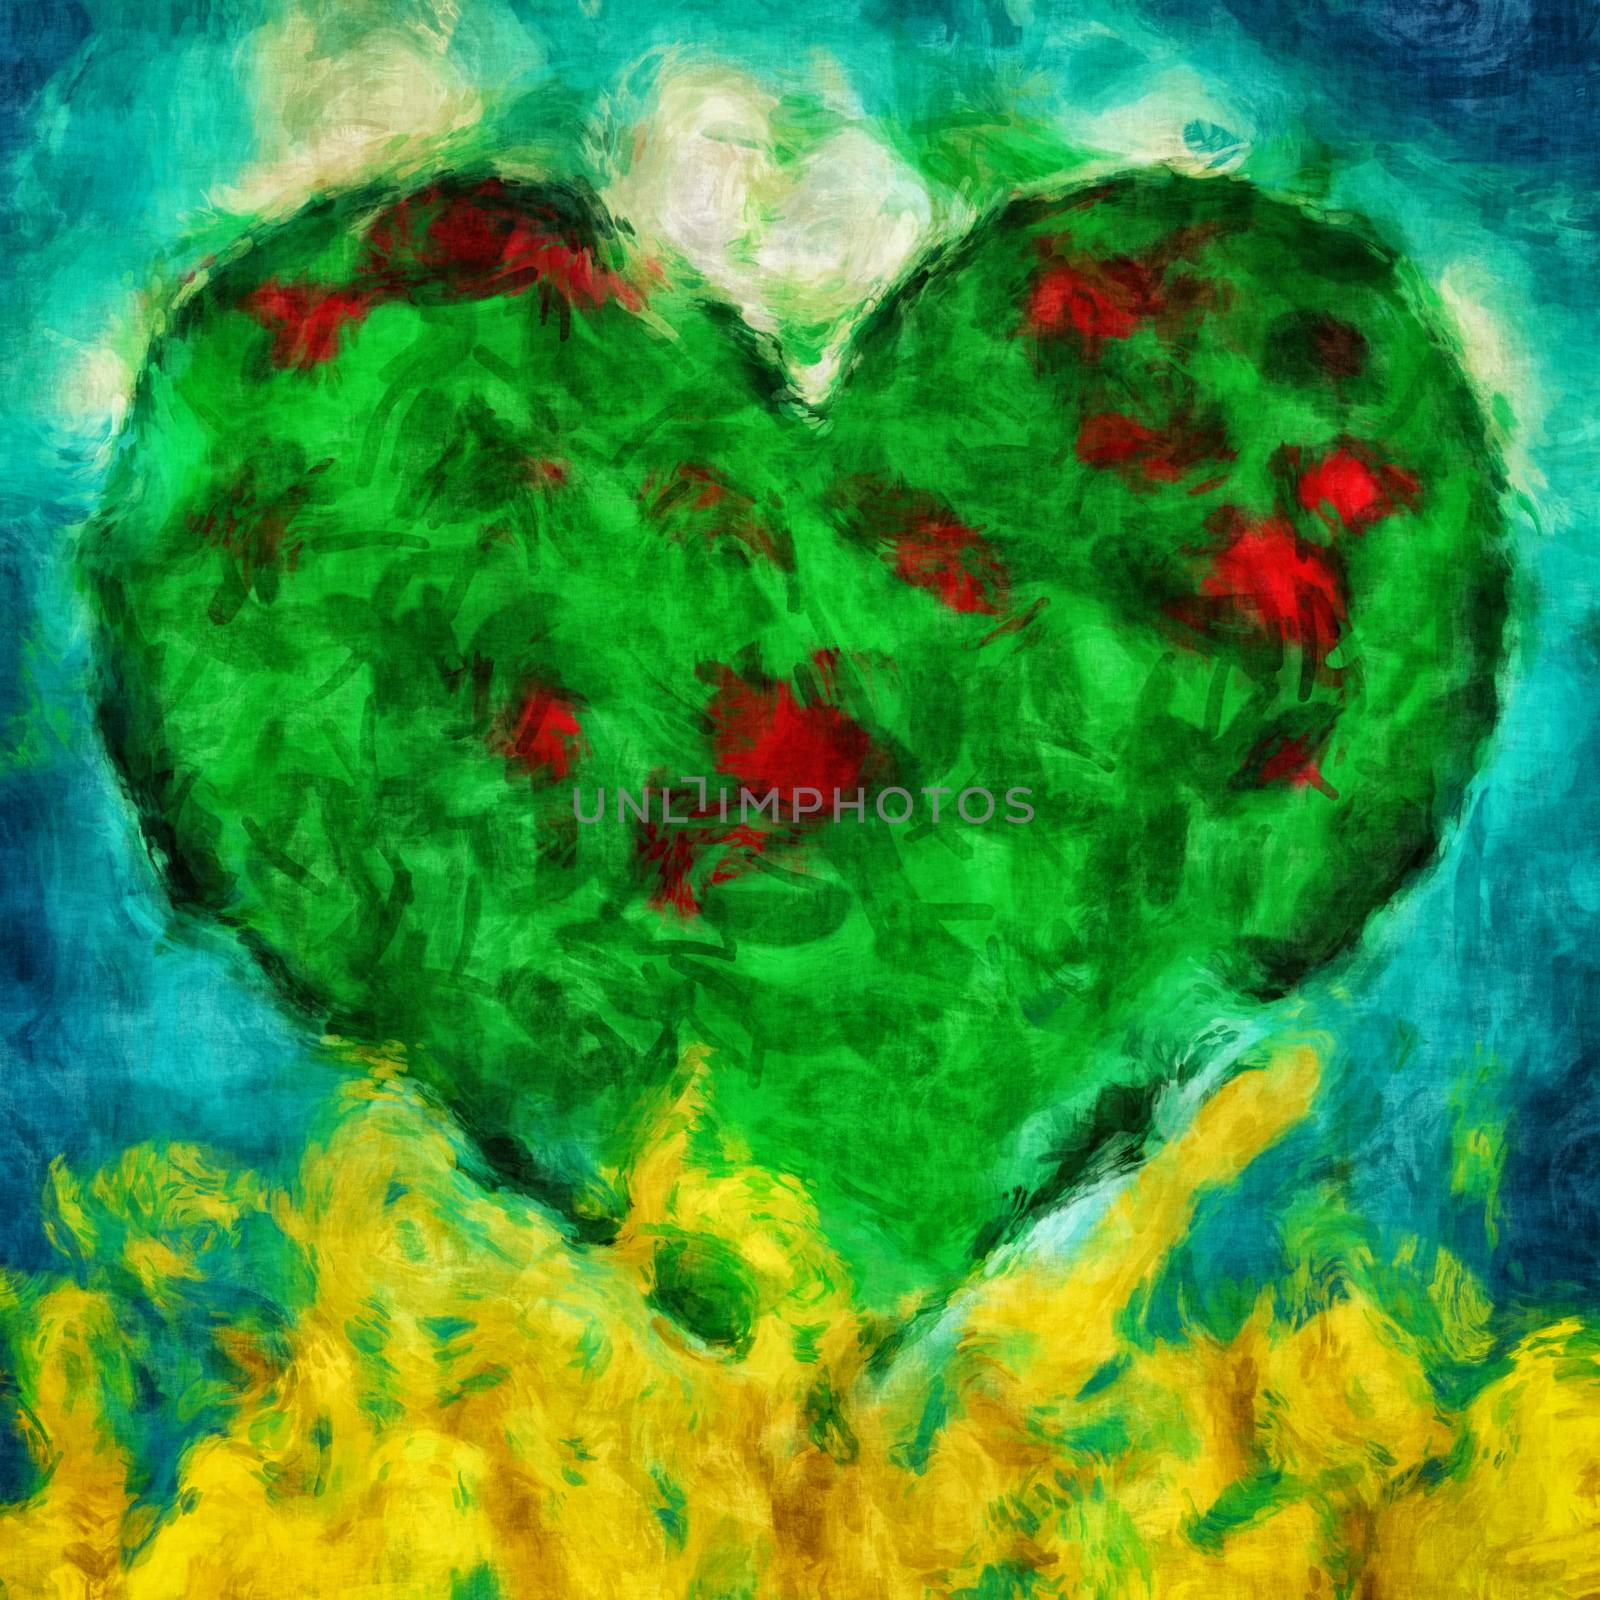 Green heart illustration by w20er